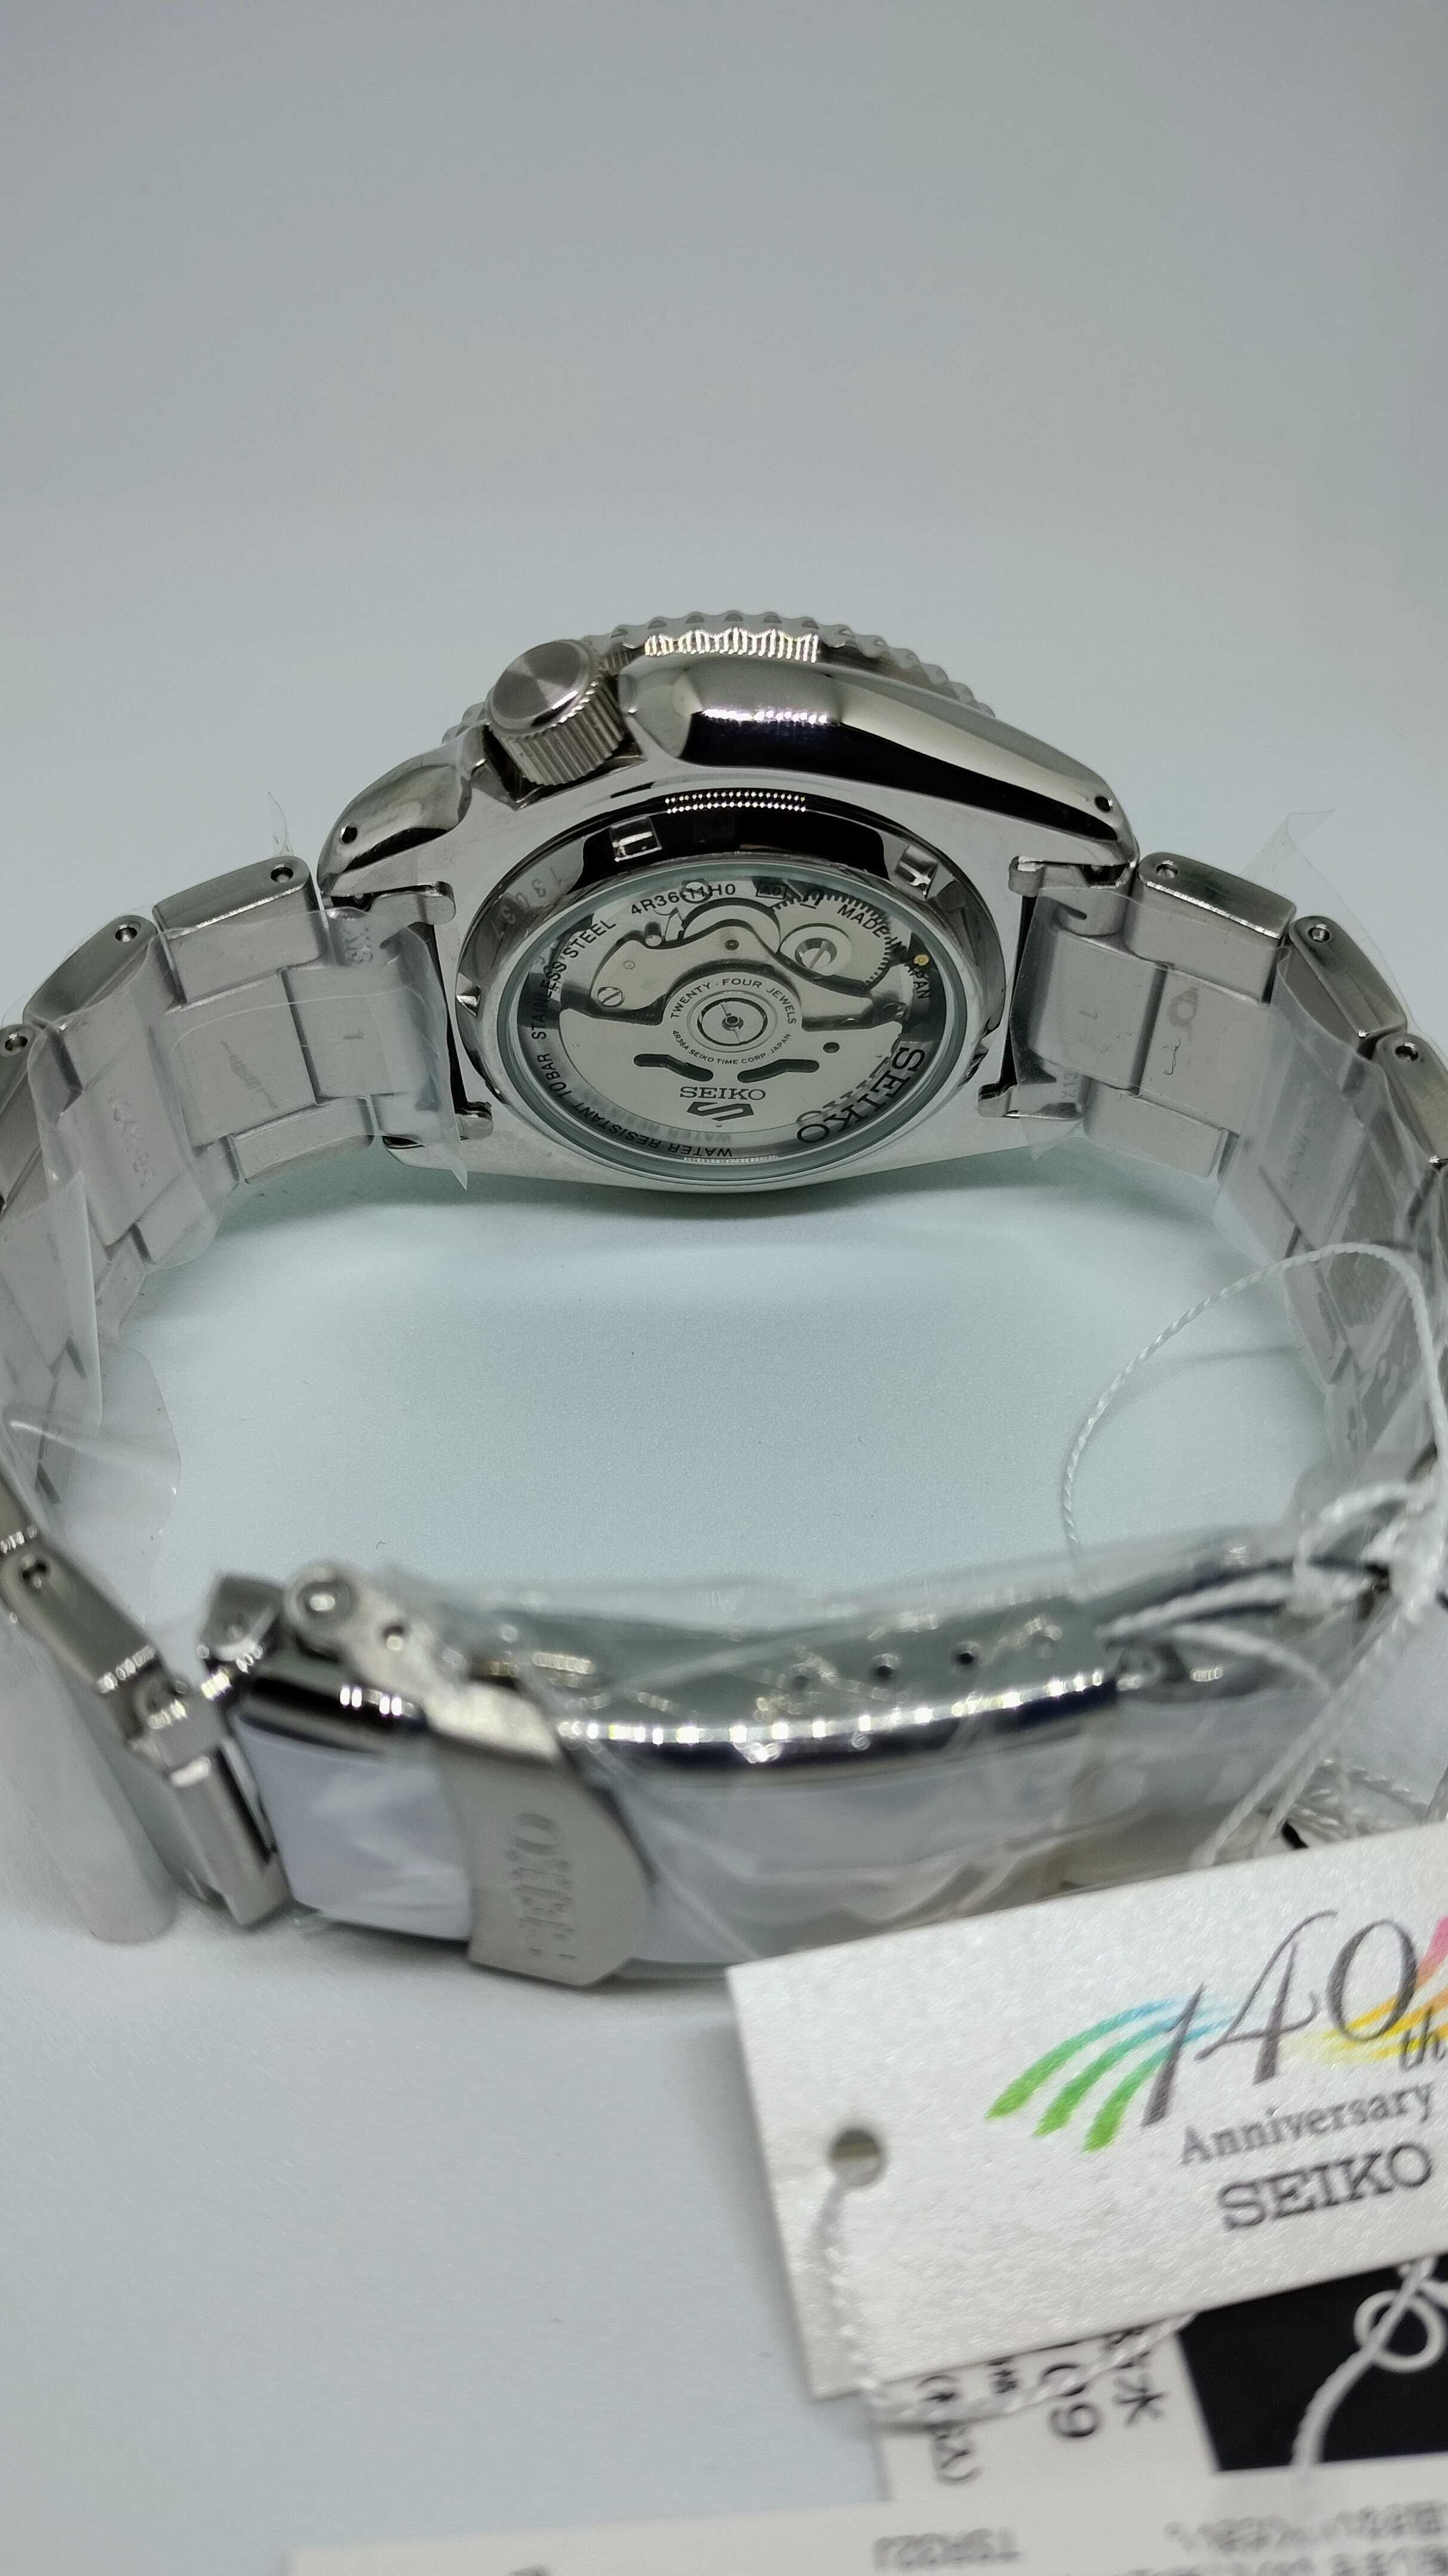 NEW! Seiko Automatic часы механические (Japan) Limited Edition !